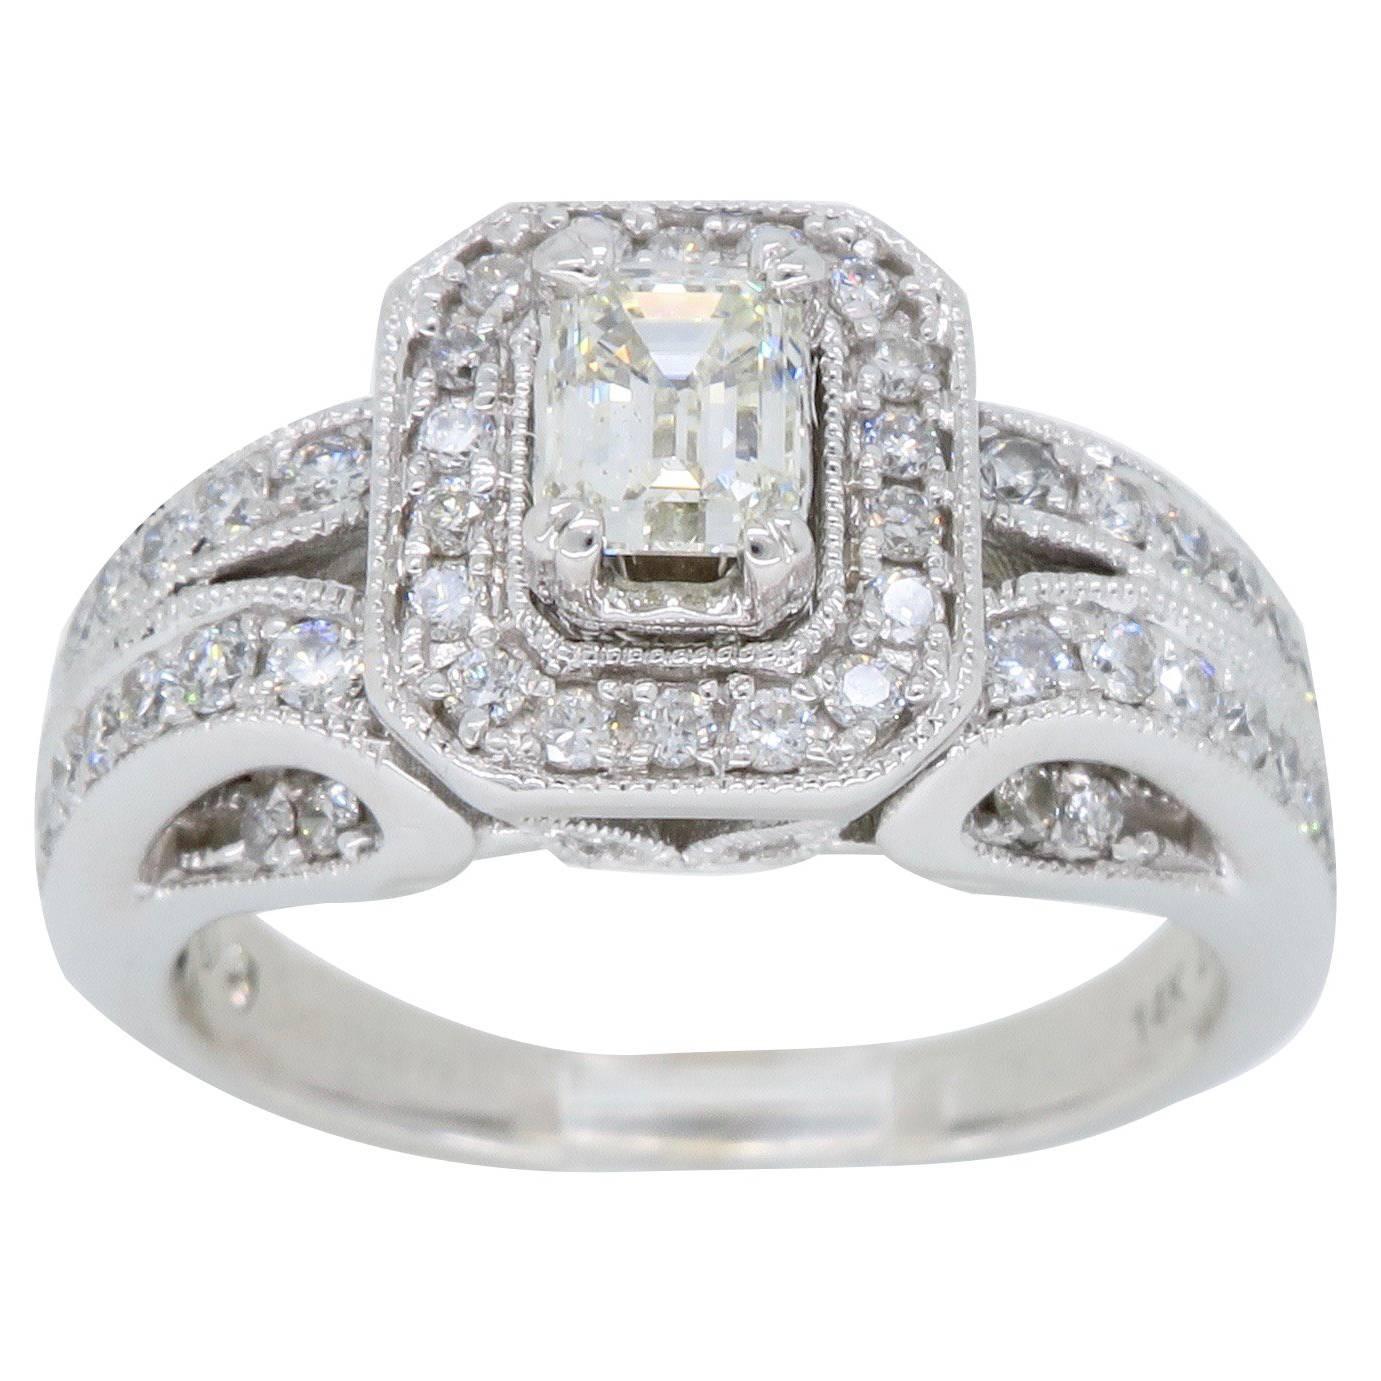 Vintage Style Emerald Cut Diamond Halo Engagement Ring